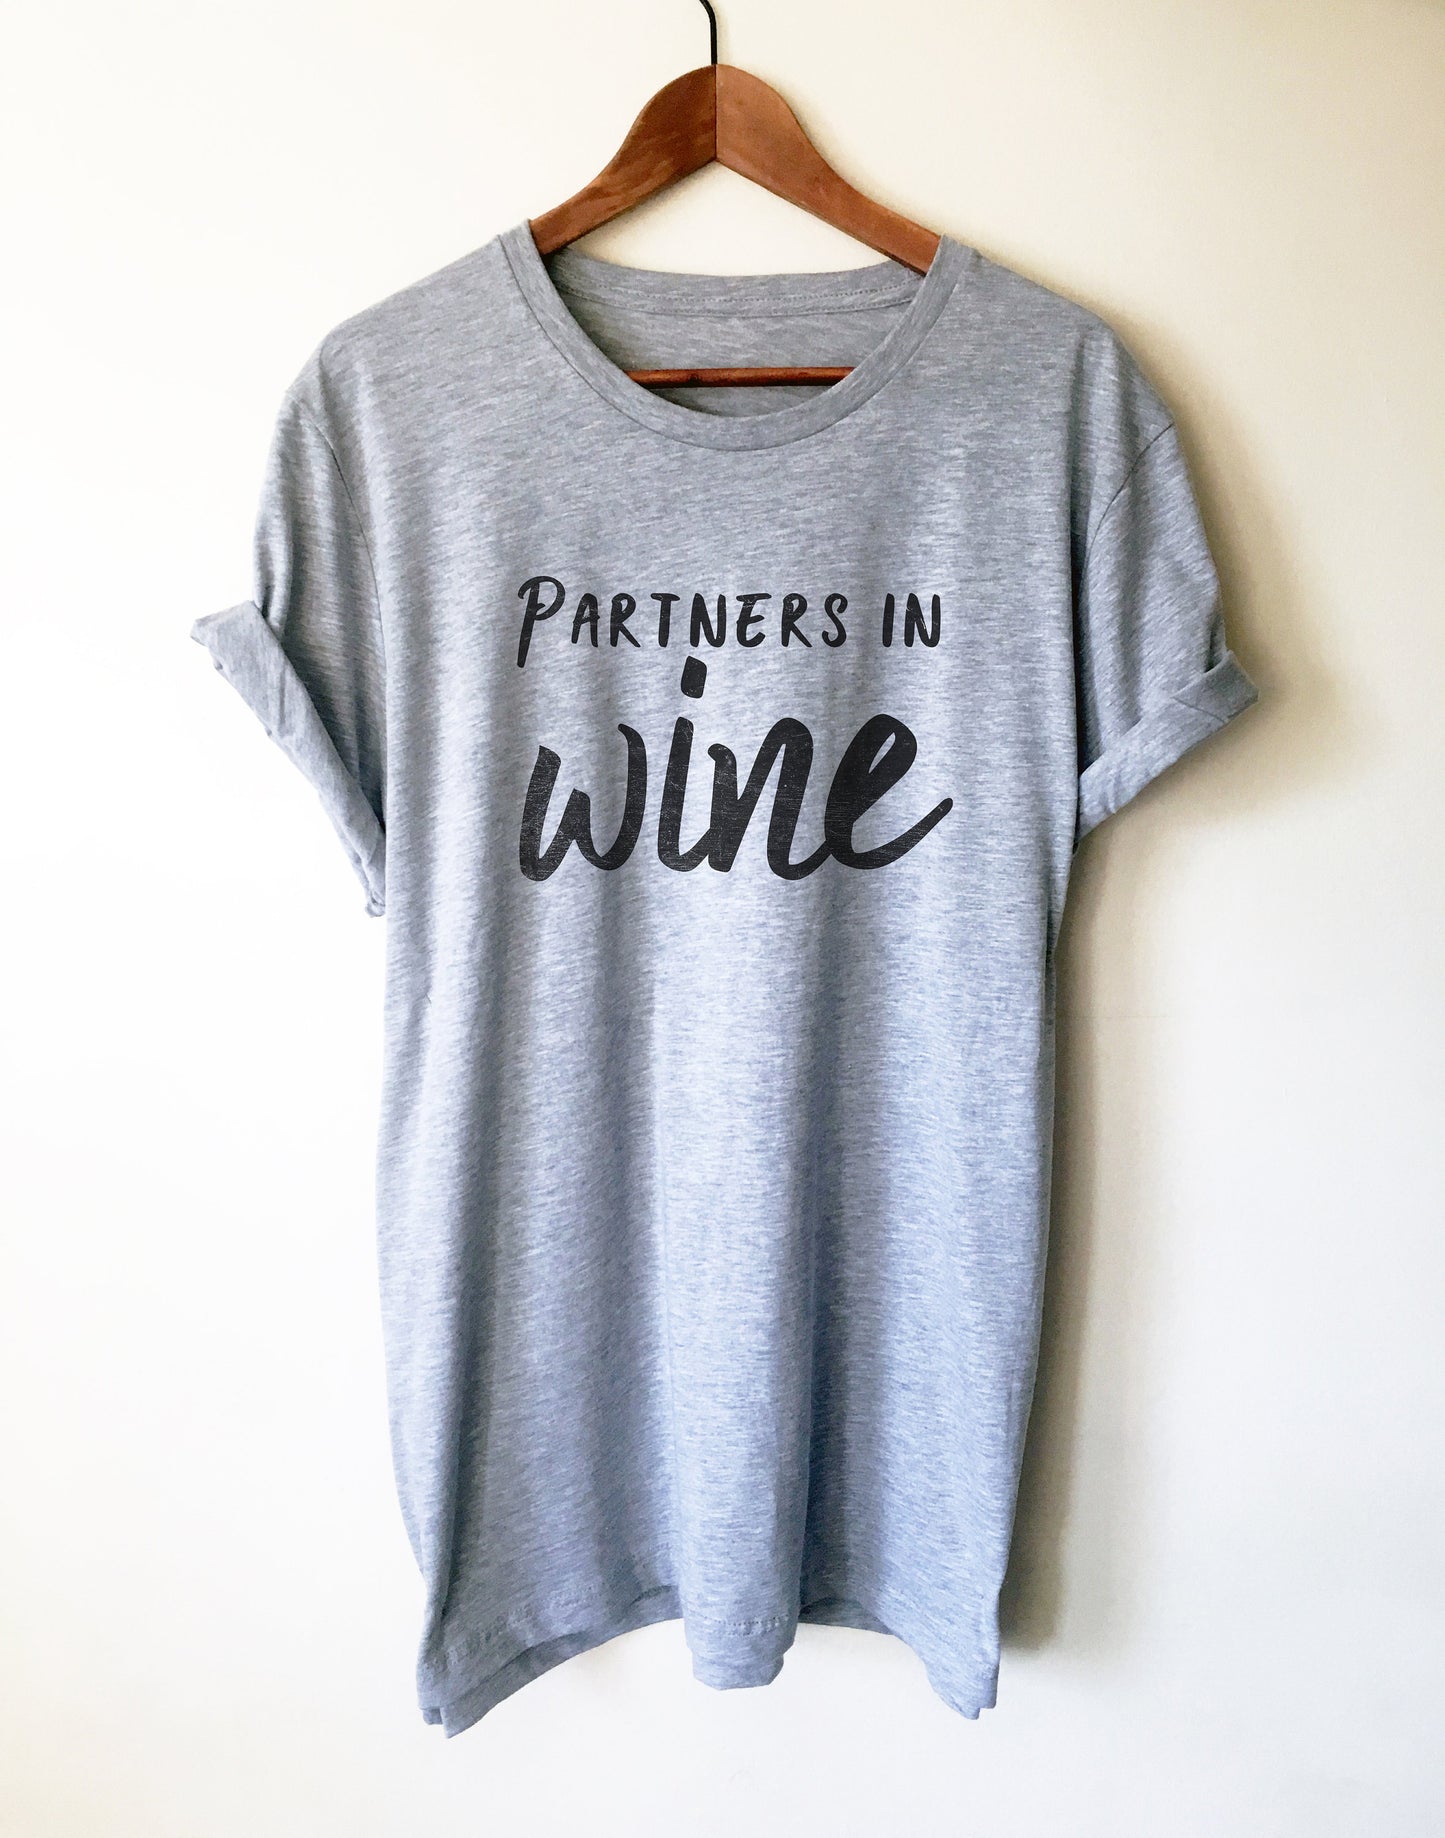 Partners In Wine Unisex Shirt -  Wine Shirt, Wine Lover Gift, Drinking Shirts, Drunk Shirt, Funny Drinking Shirt, Drinking Team Shirts